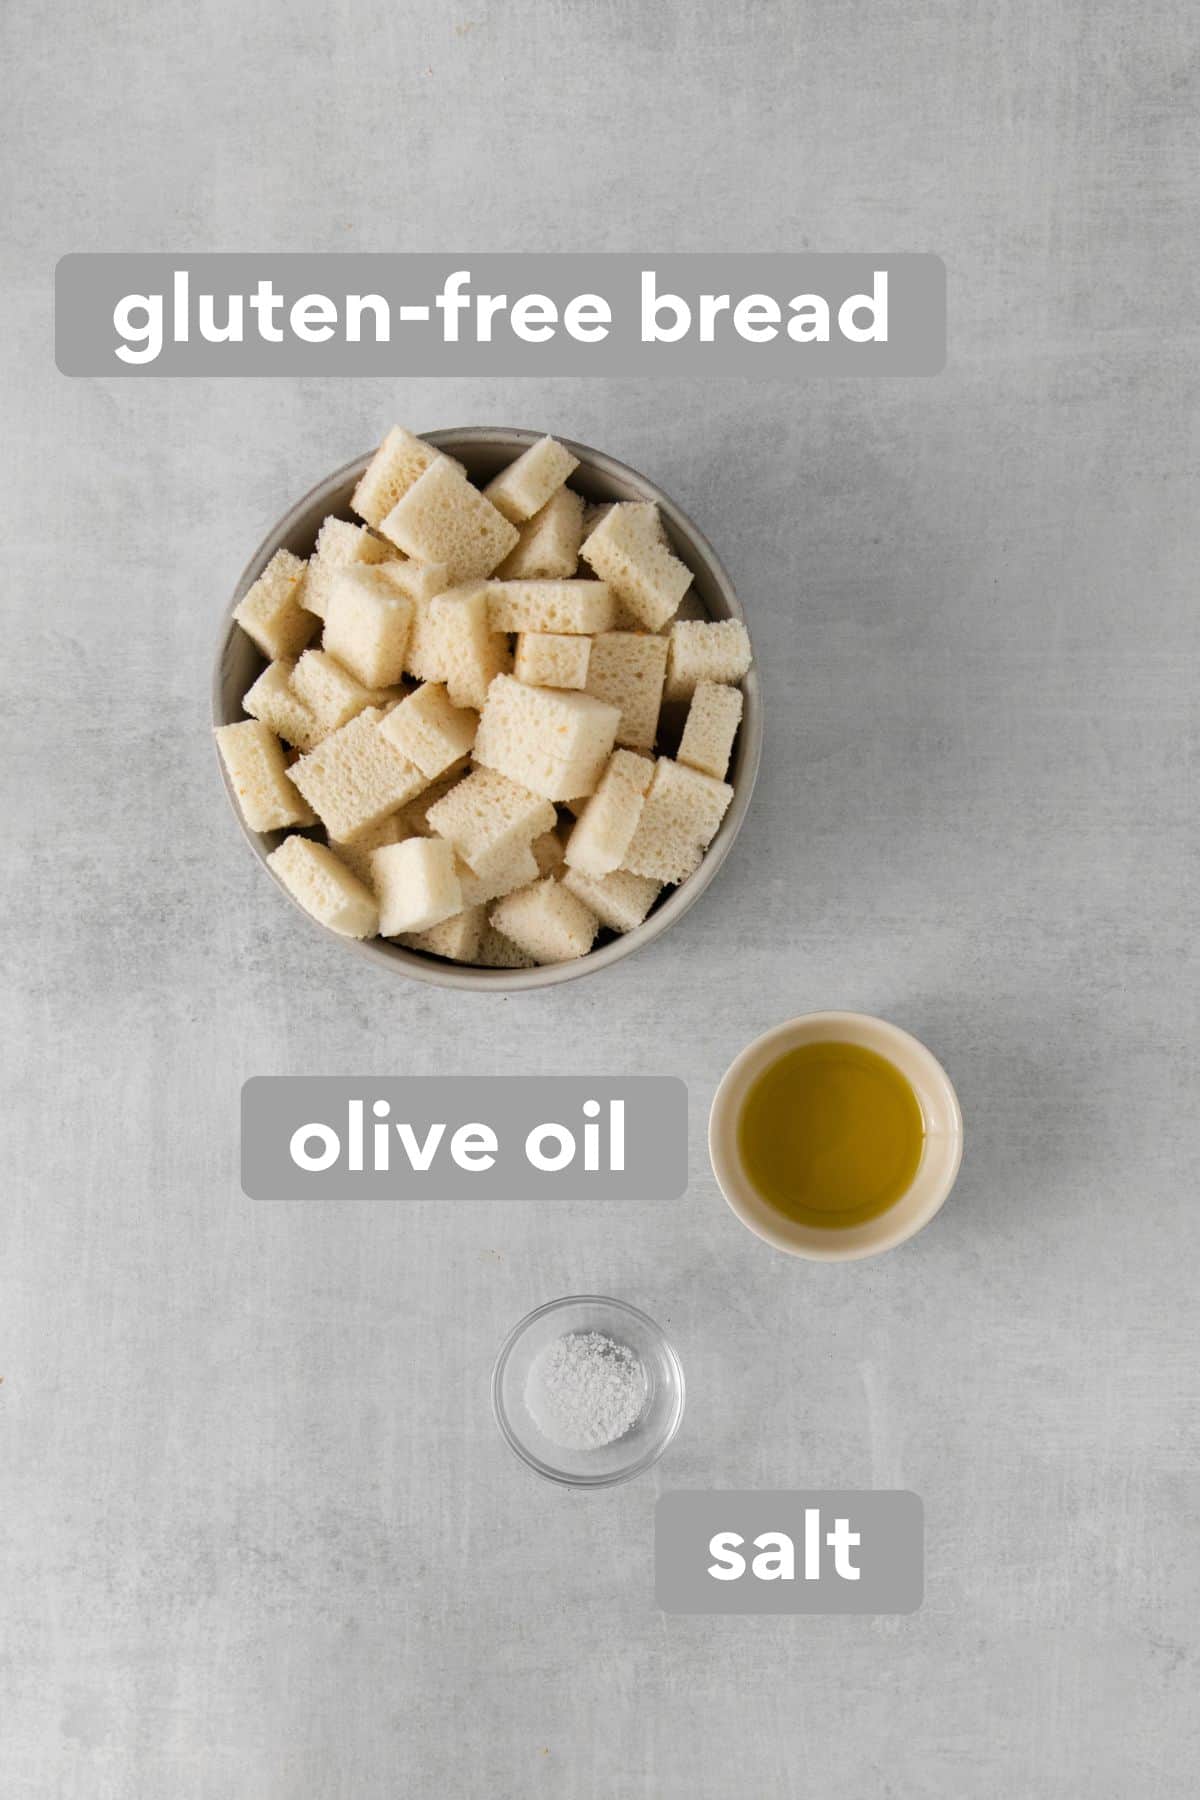 Gluten-free breadcrumb ingredients on a countertop